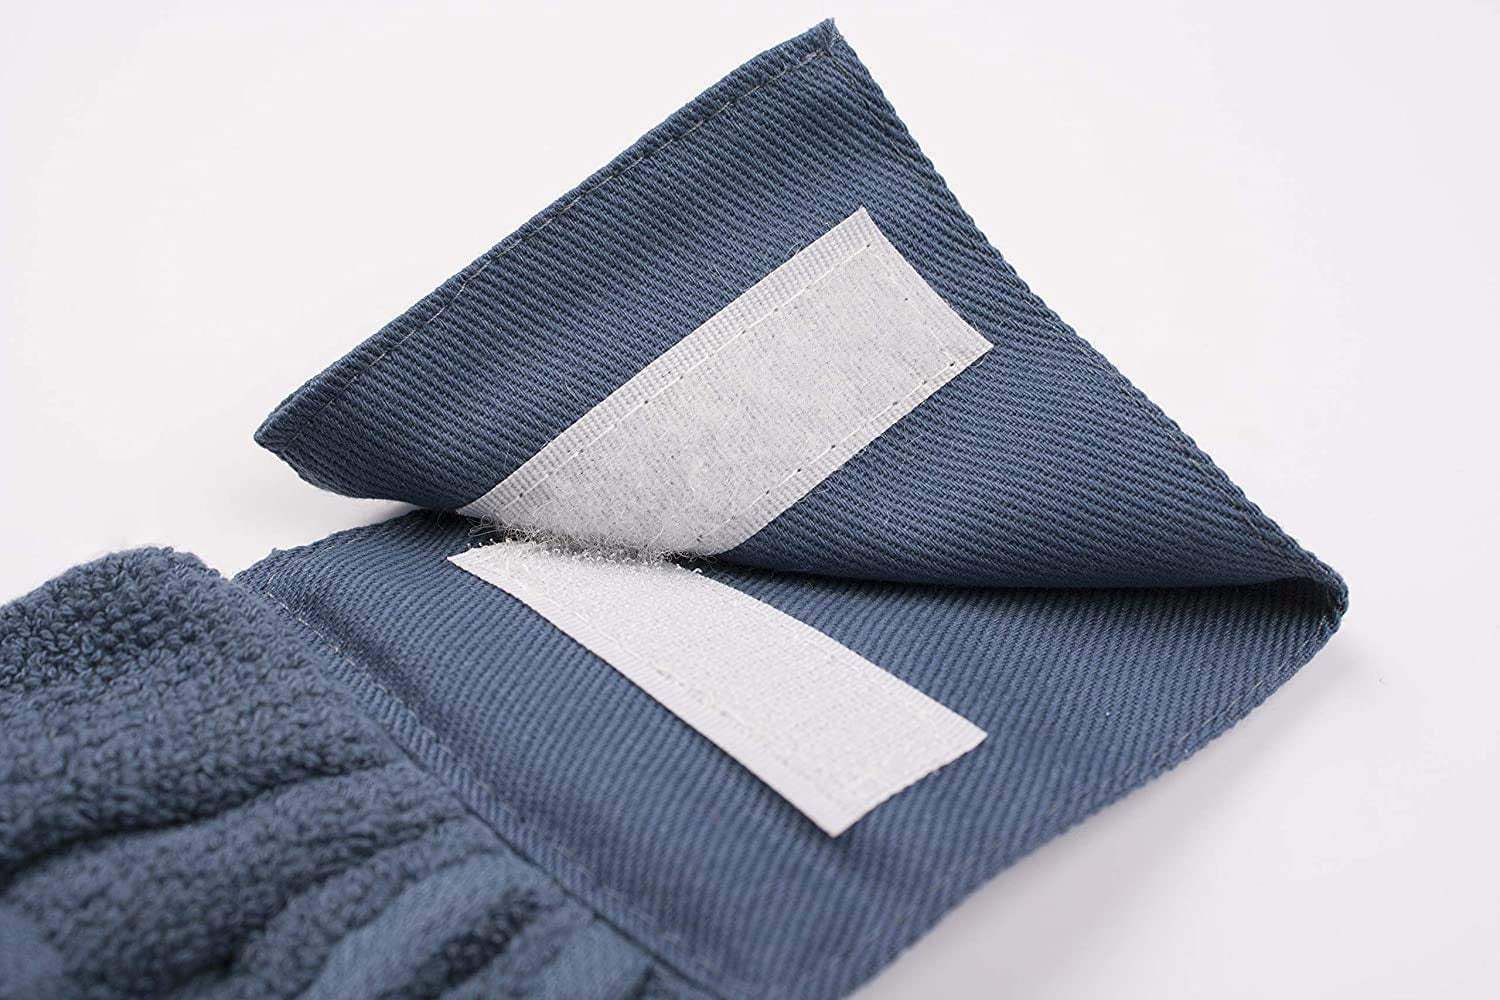 ZENVY Tie Latch Towels Set of 2, Hanging Hand Towels Set with Hook & Loop